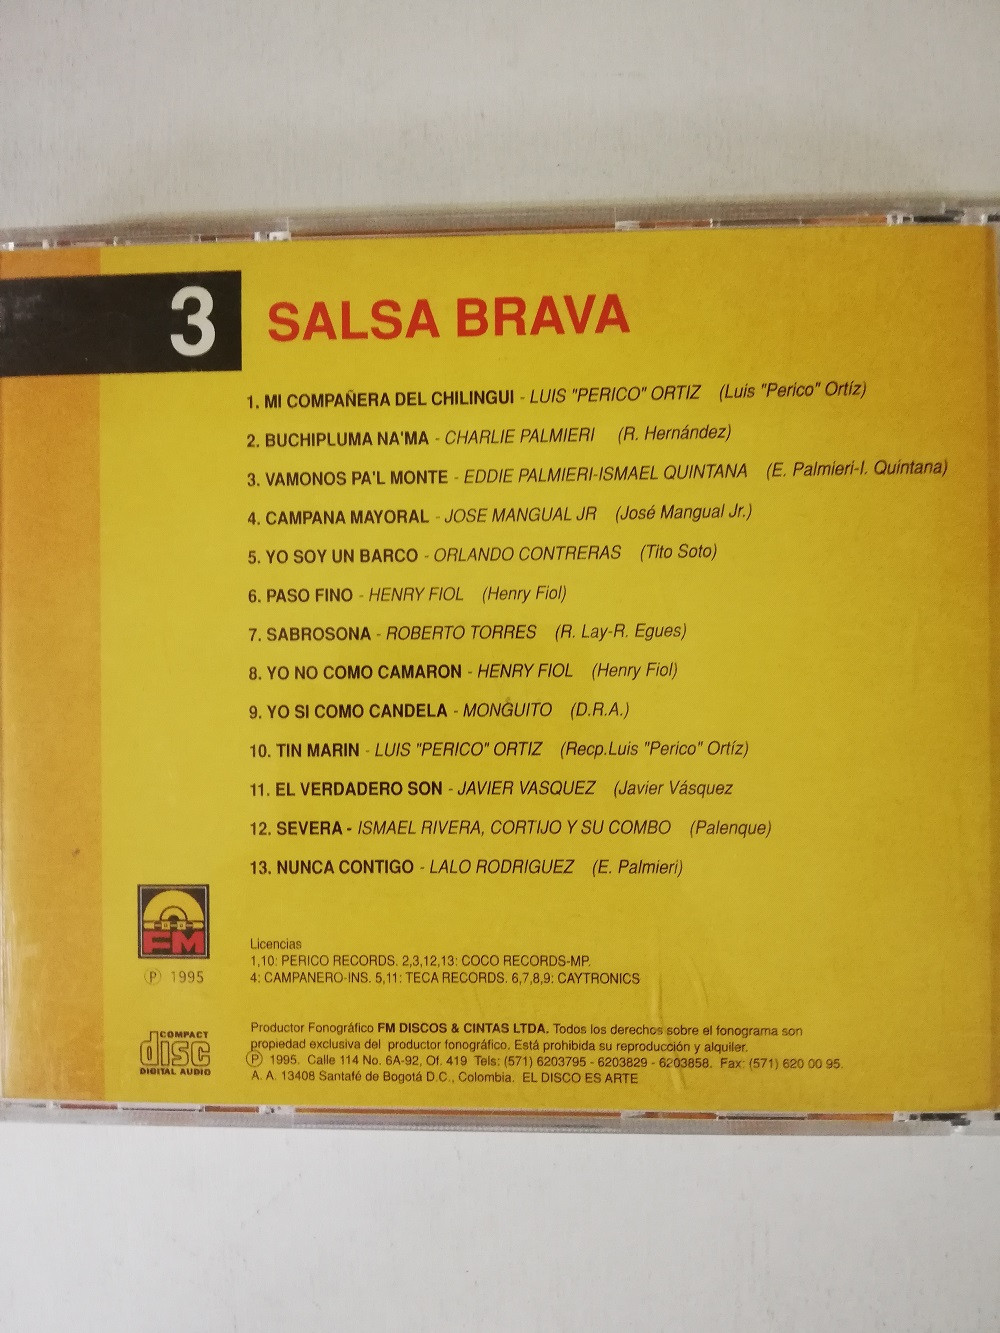 Imagen CD 5 HORAS DE SALSA VOL. 3 - SALSA BRAVA 2